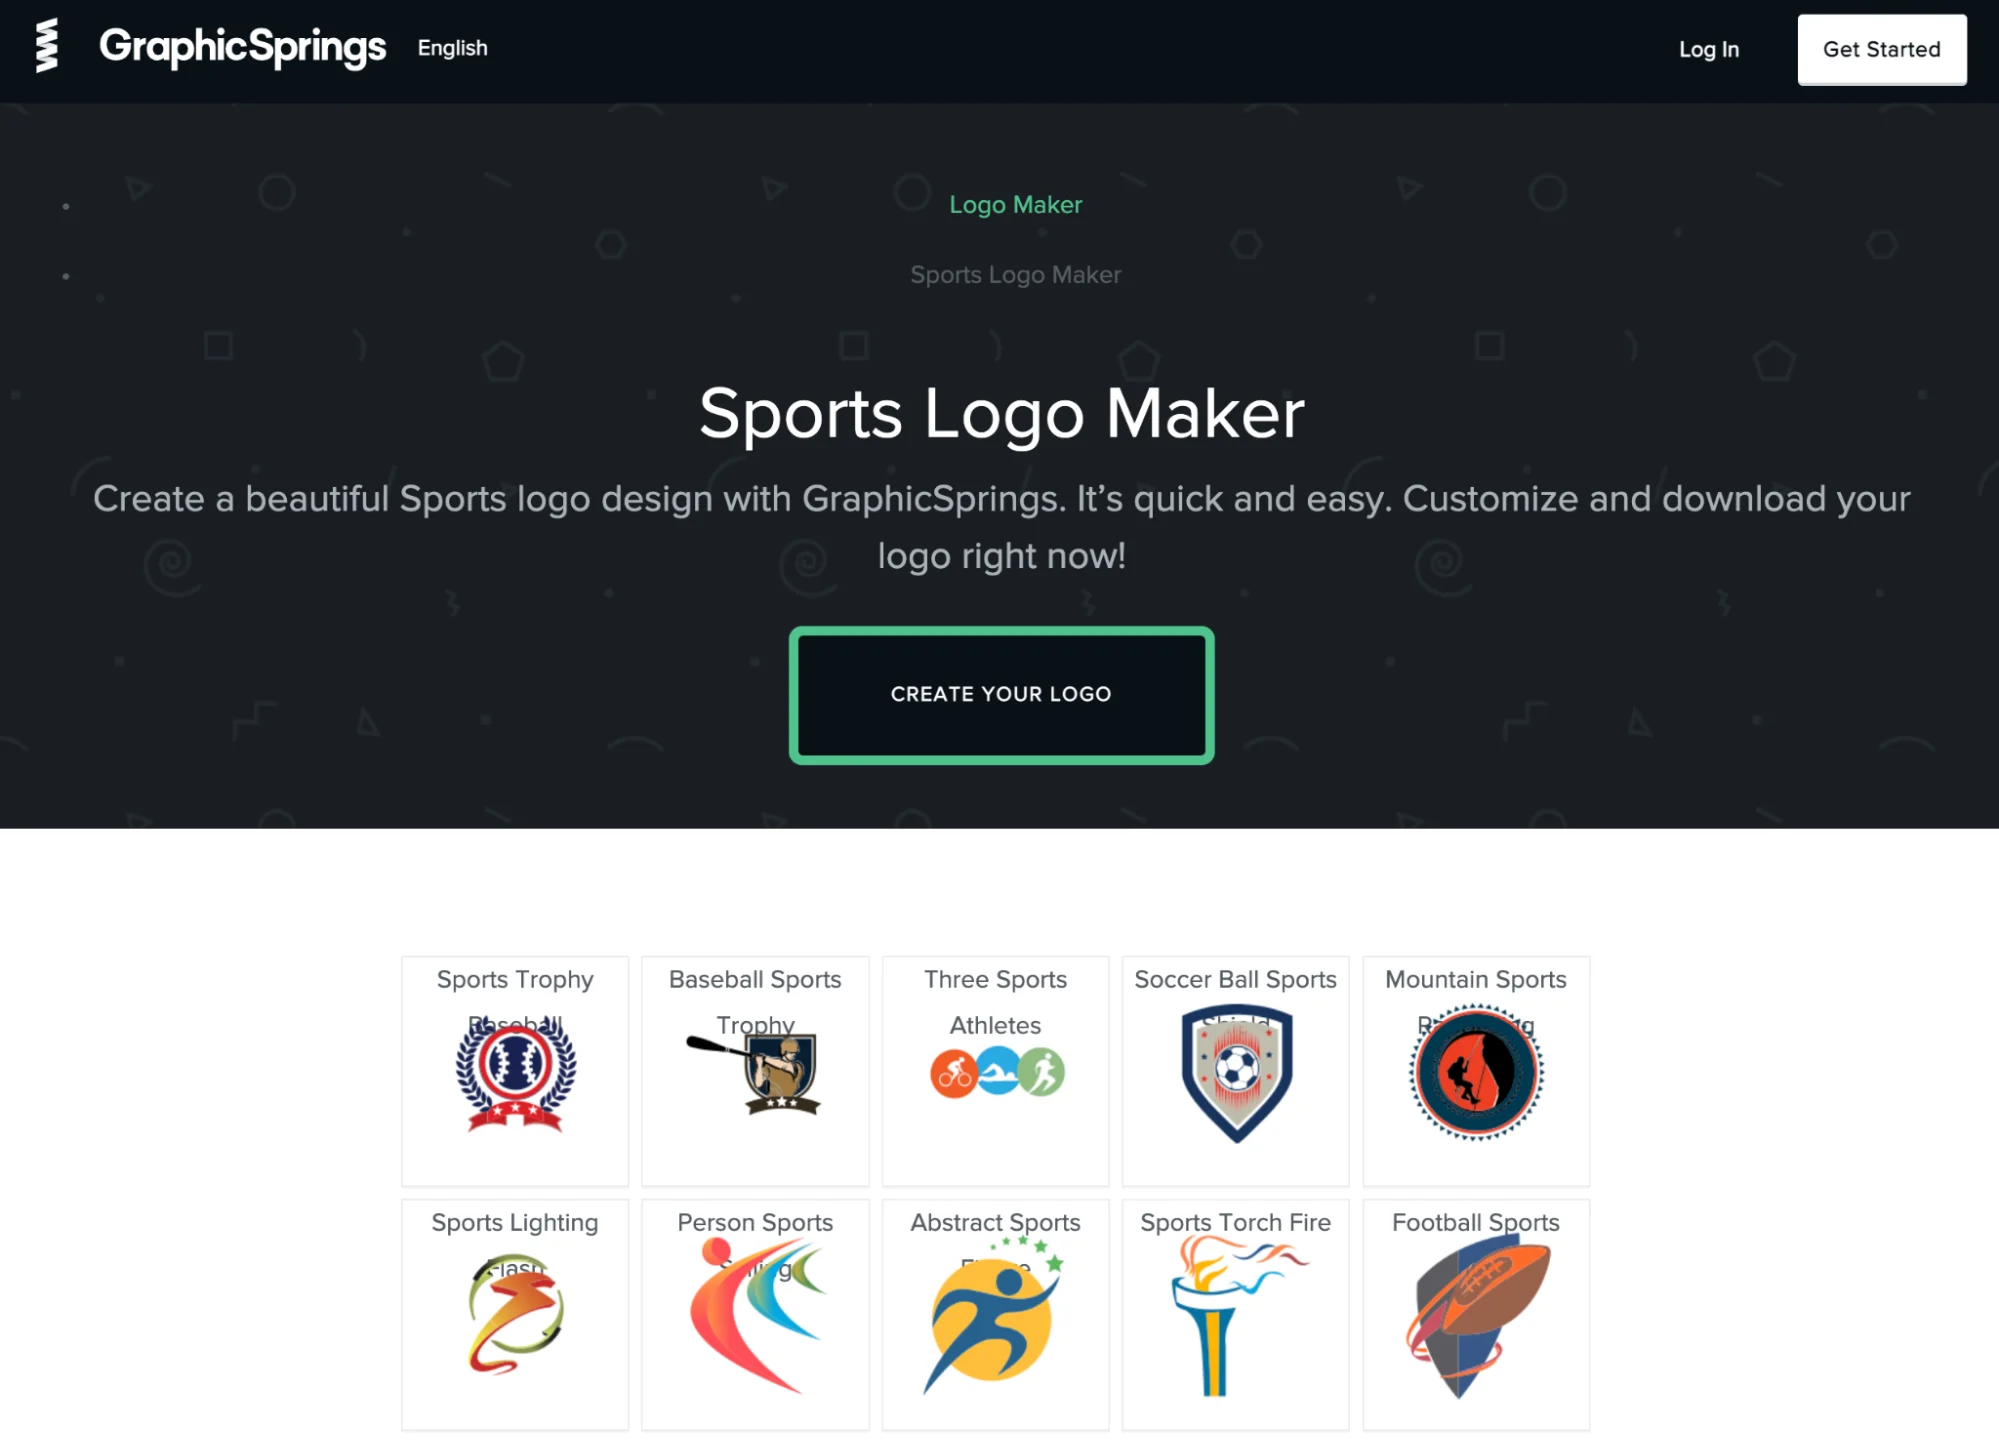 graphic springs sports logo maker